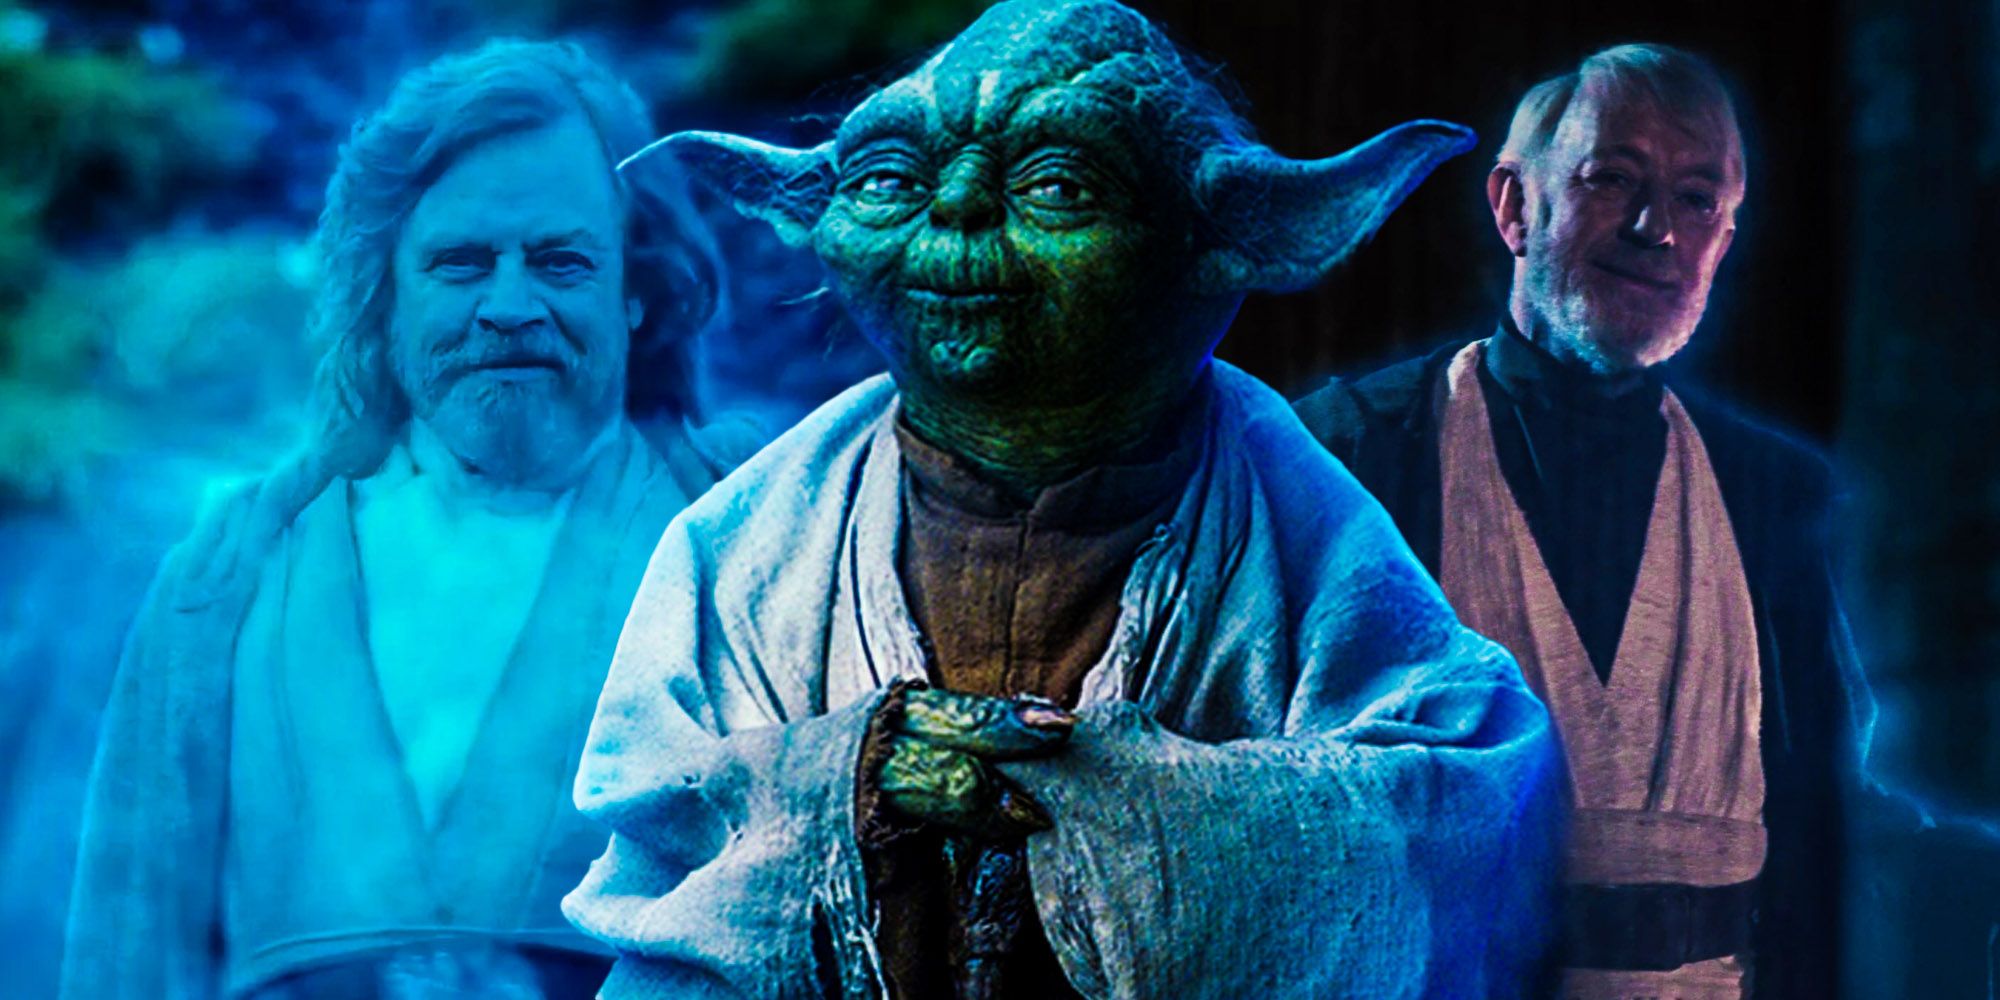 Yoda obi wan Luke Skywalker force ghosts Star wars